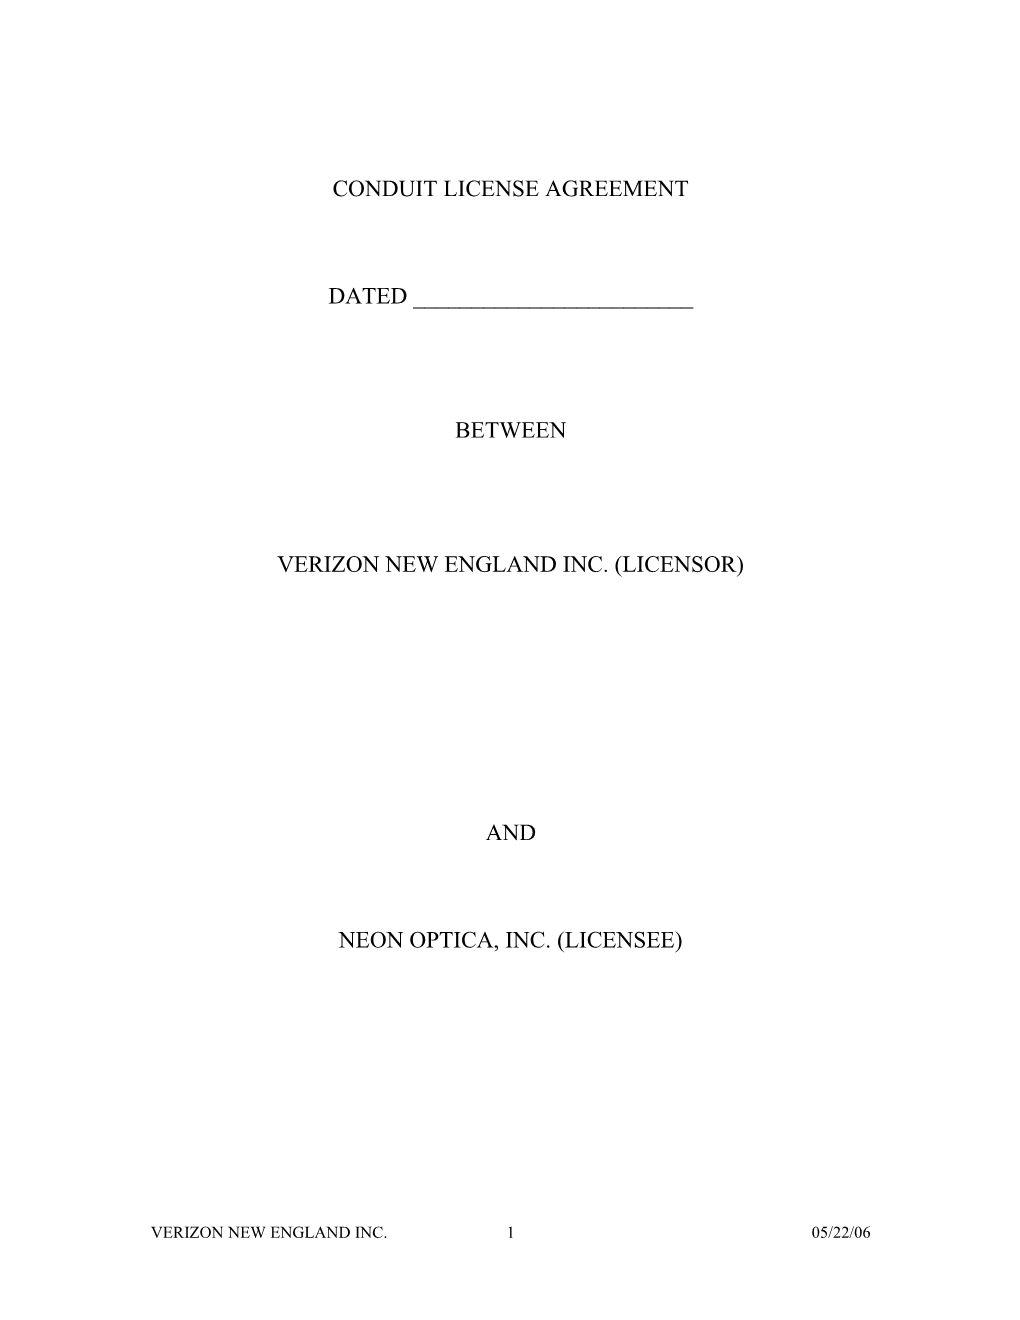 Conduit License Agreement